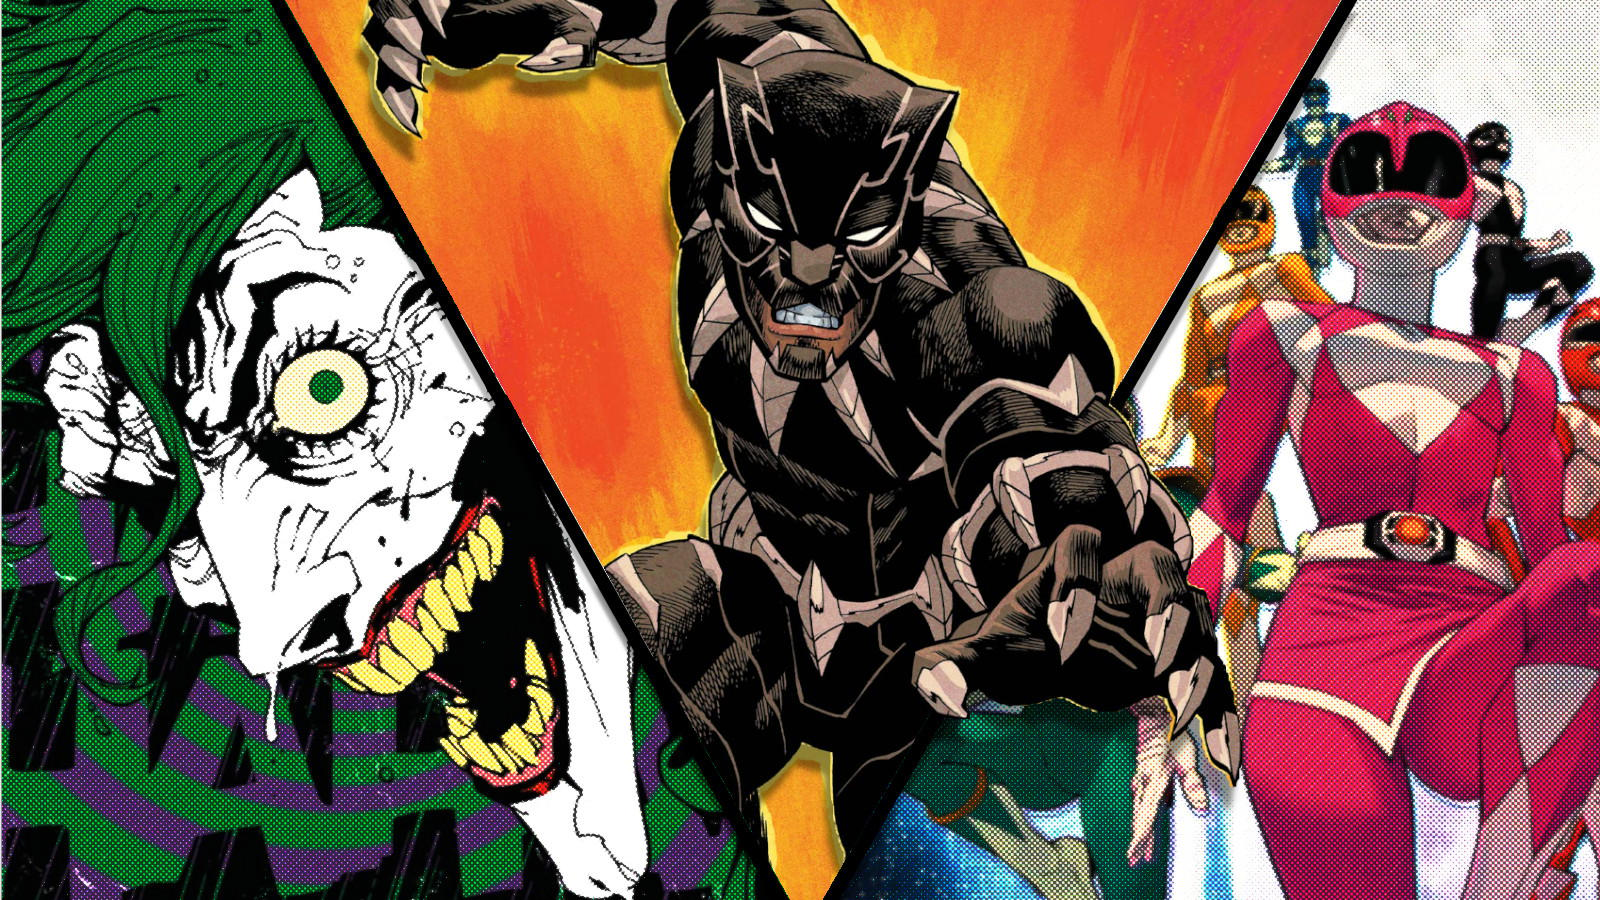 Joker, Black Panther, and Power Rangers key art.